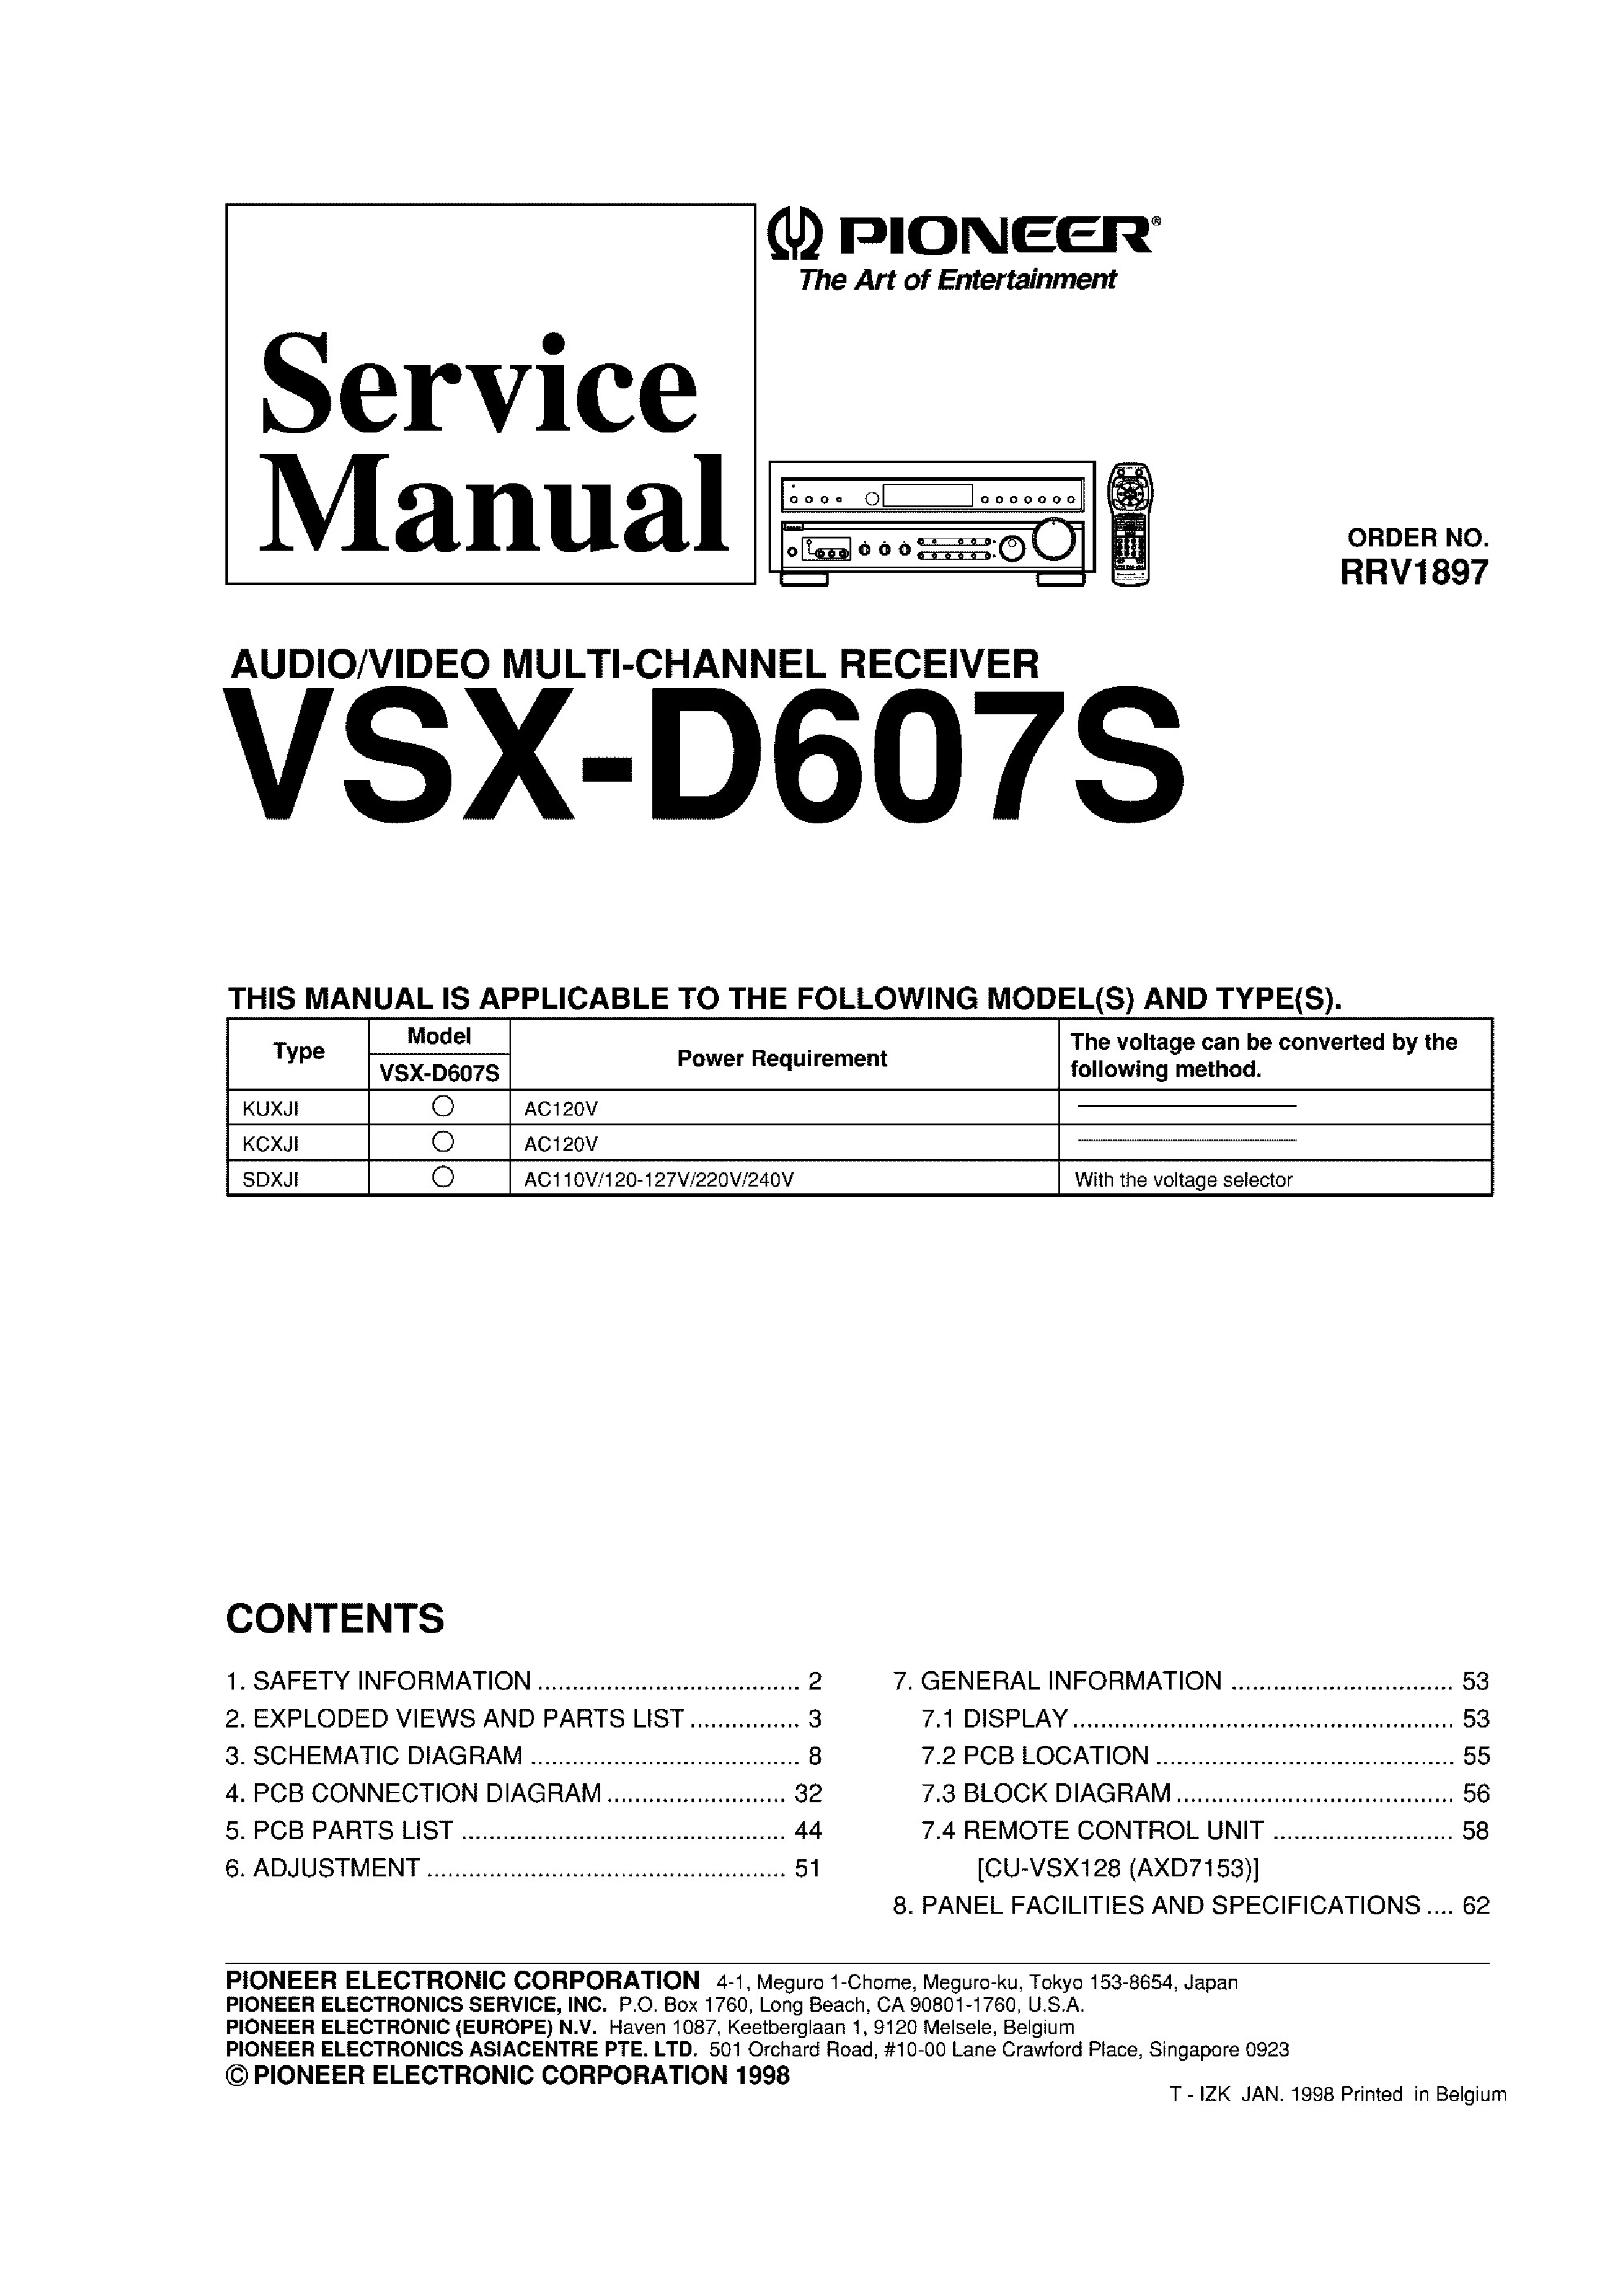 Service Manual for PIONEER DV-340/WYXQ/FRGR - Download